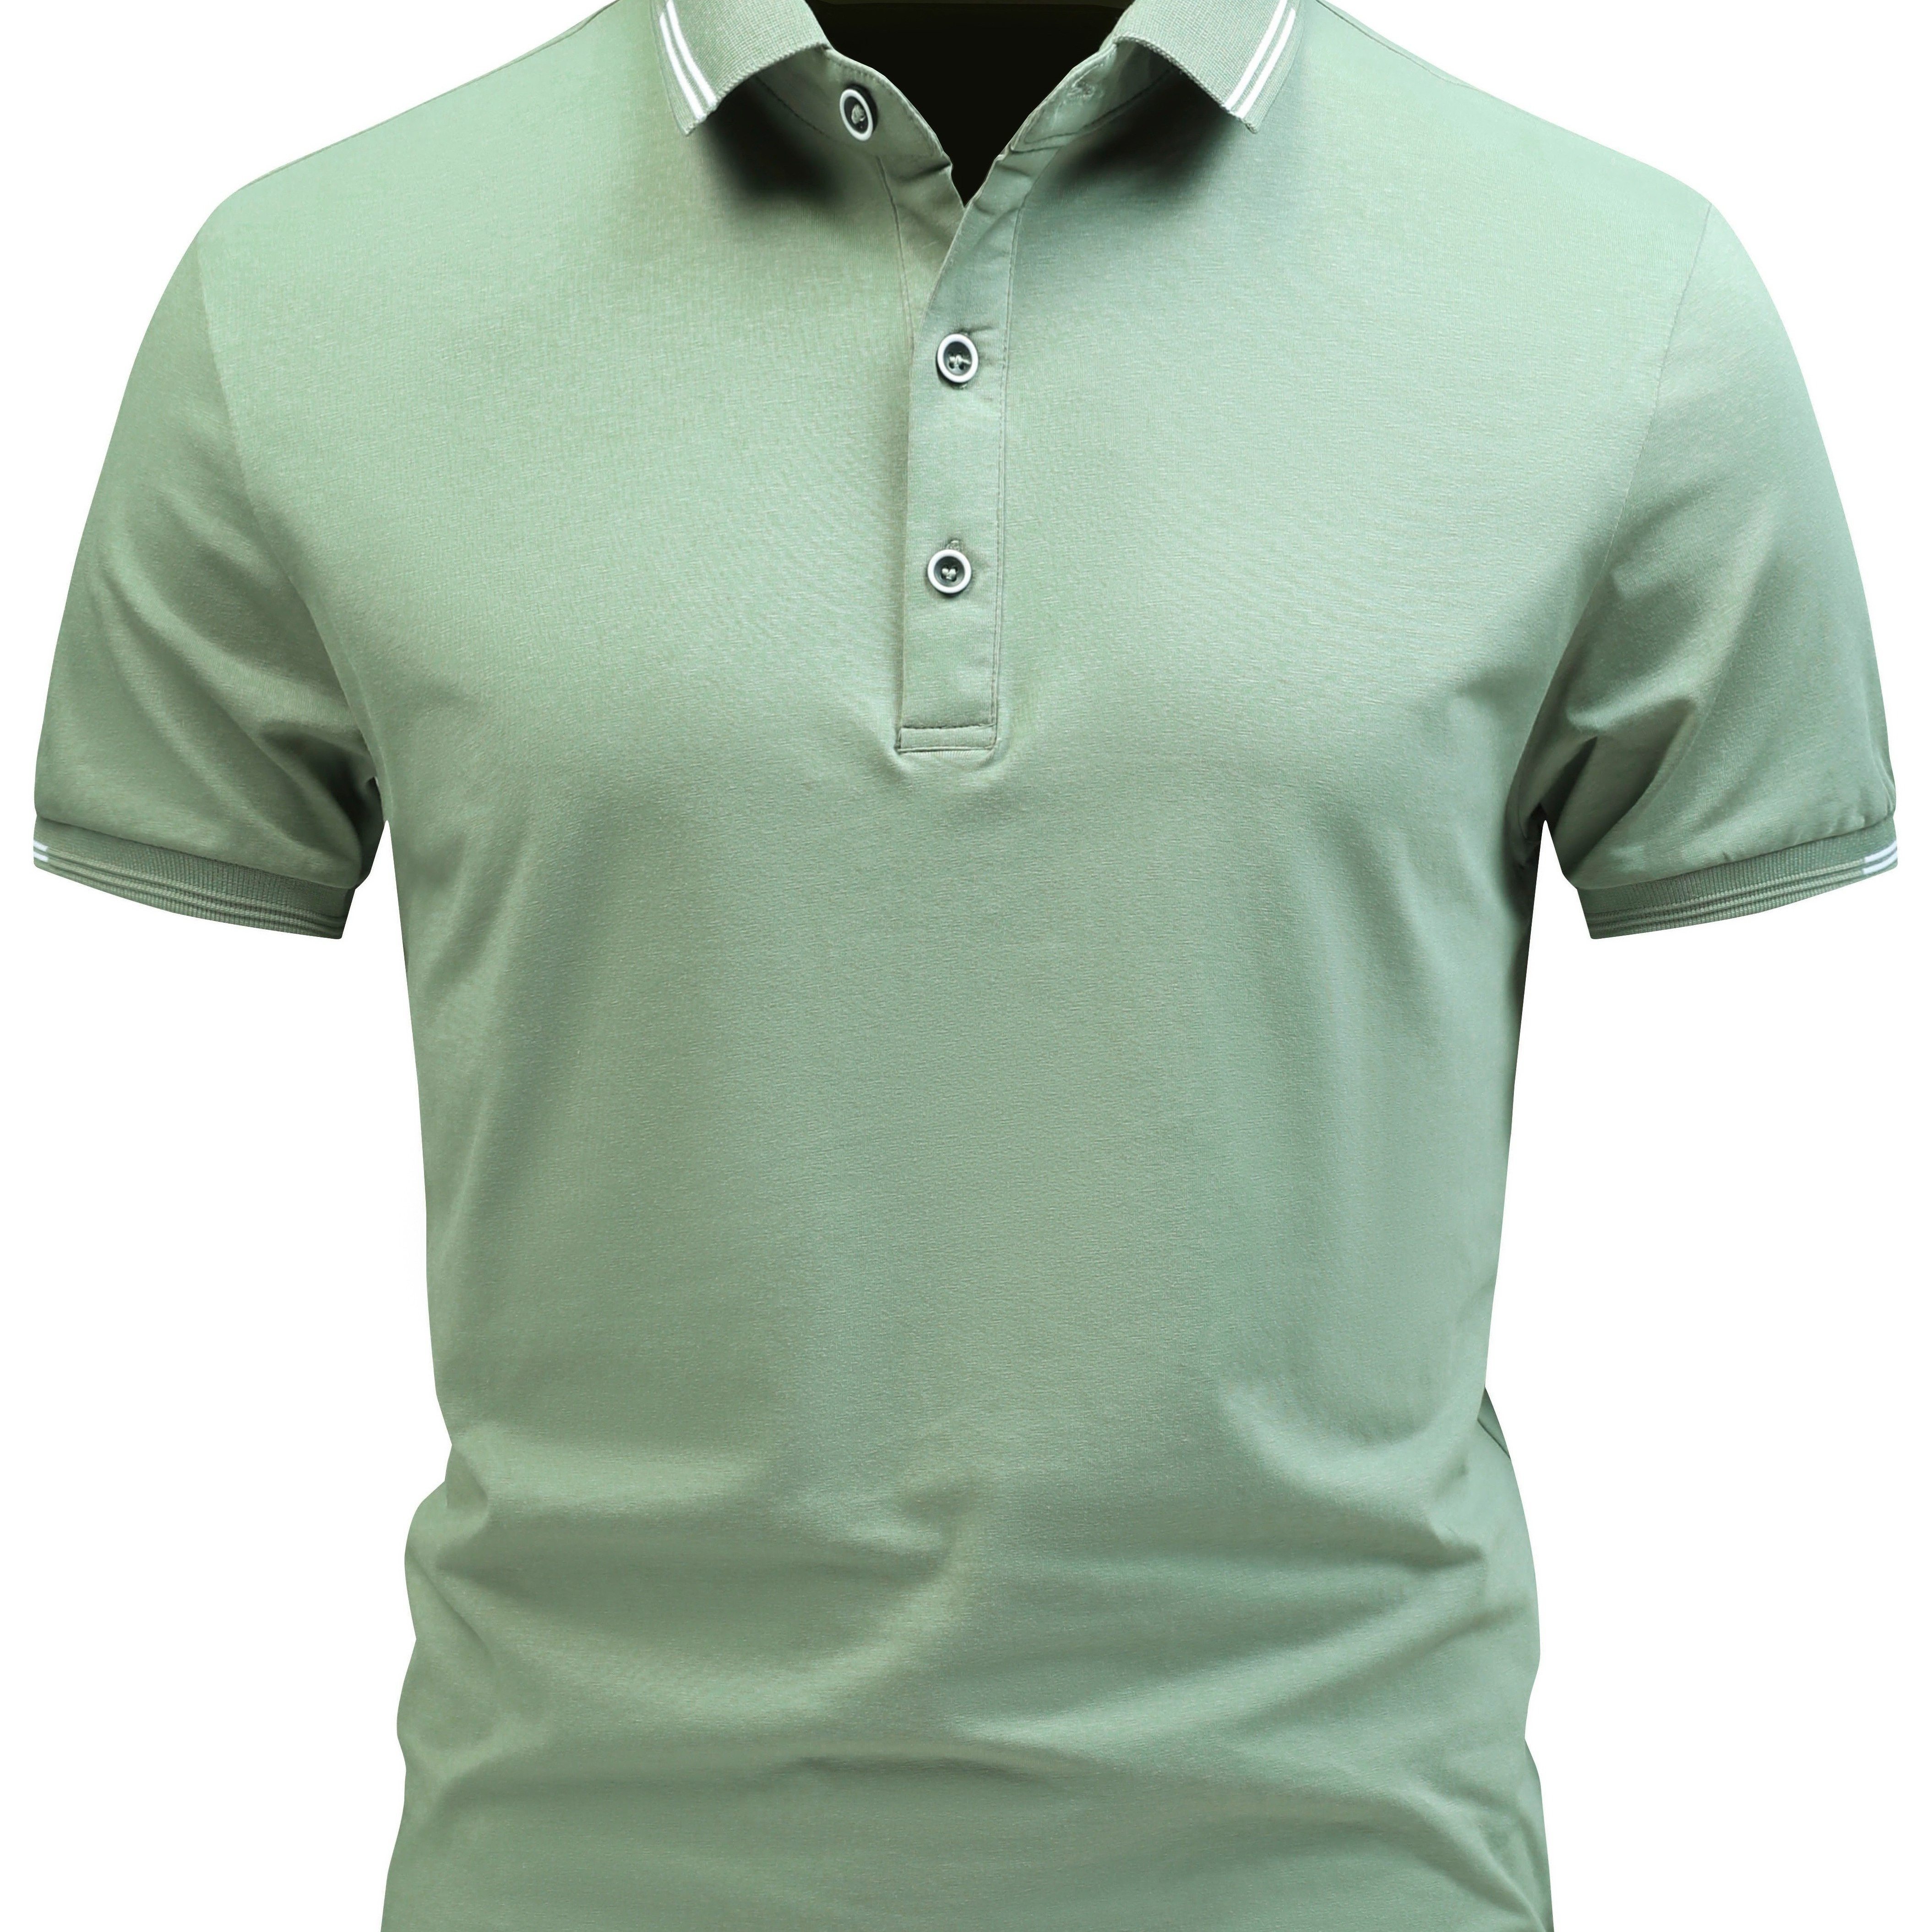 

Men's Solid Golf Shirt, Casual Cotton Blend Lapel Short Sleeve Shirt For Outdoor